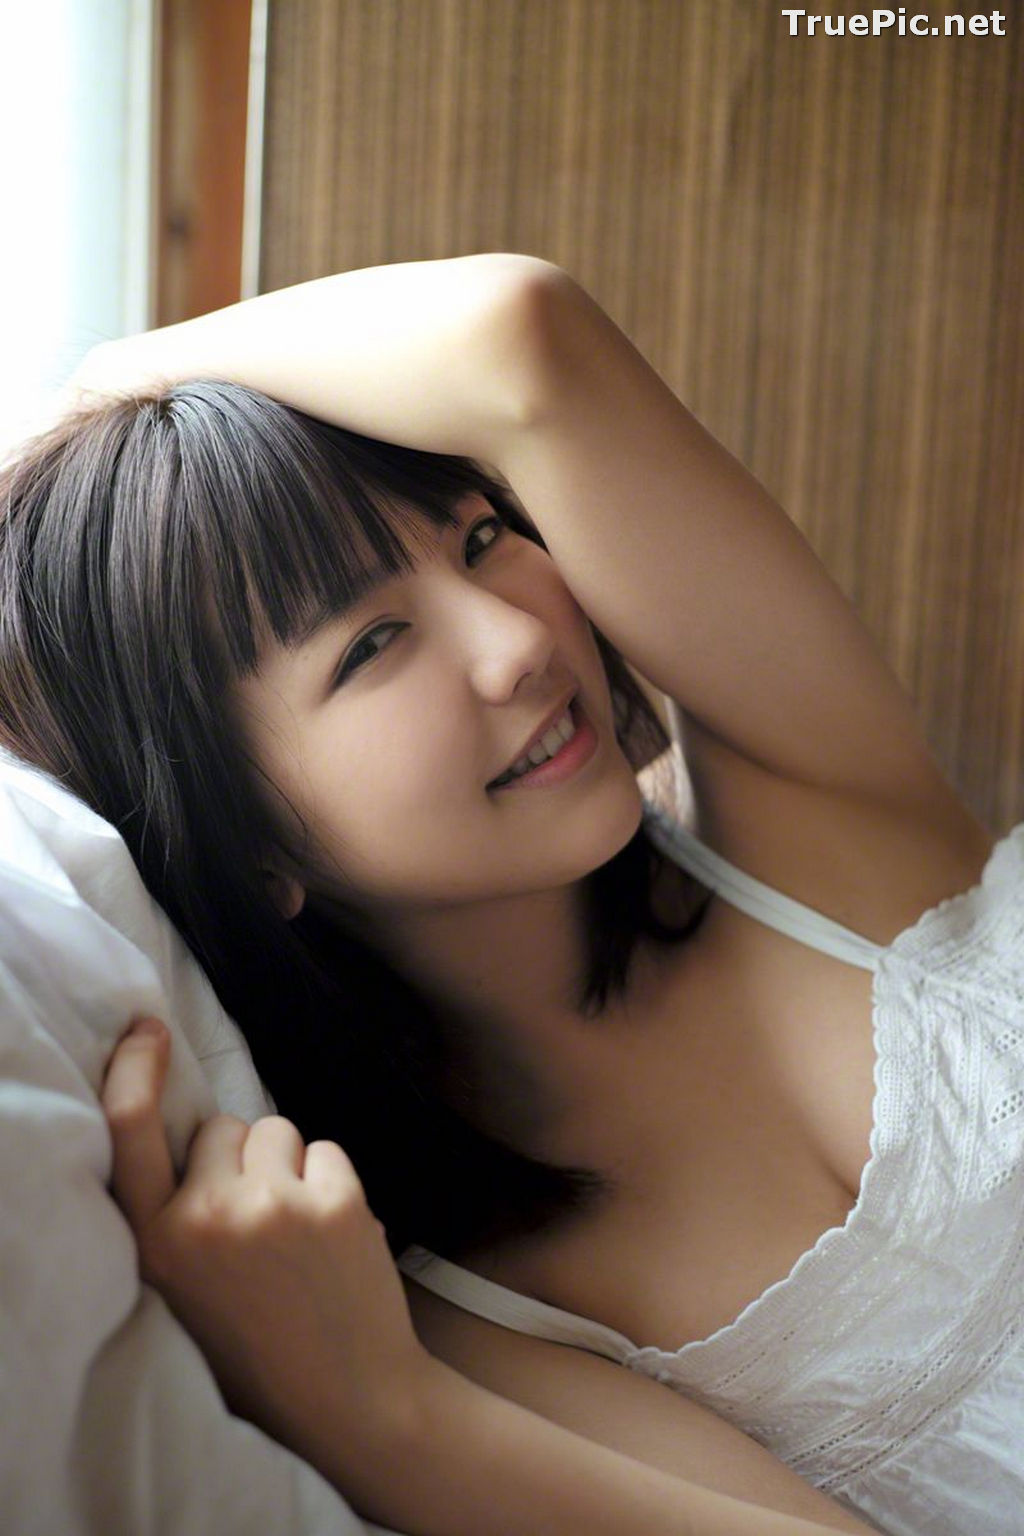 Image Wanibooks No.130 - Japanese Idol Singer and Actress - Erina Mano - TruePic.net - Picture-118